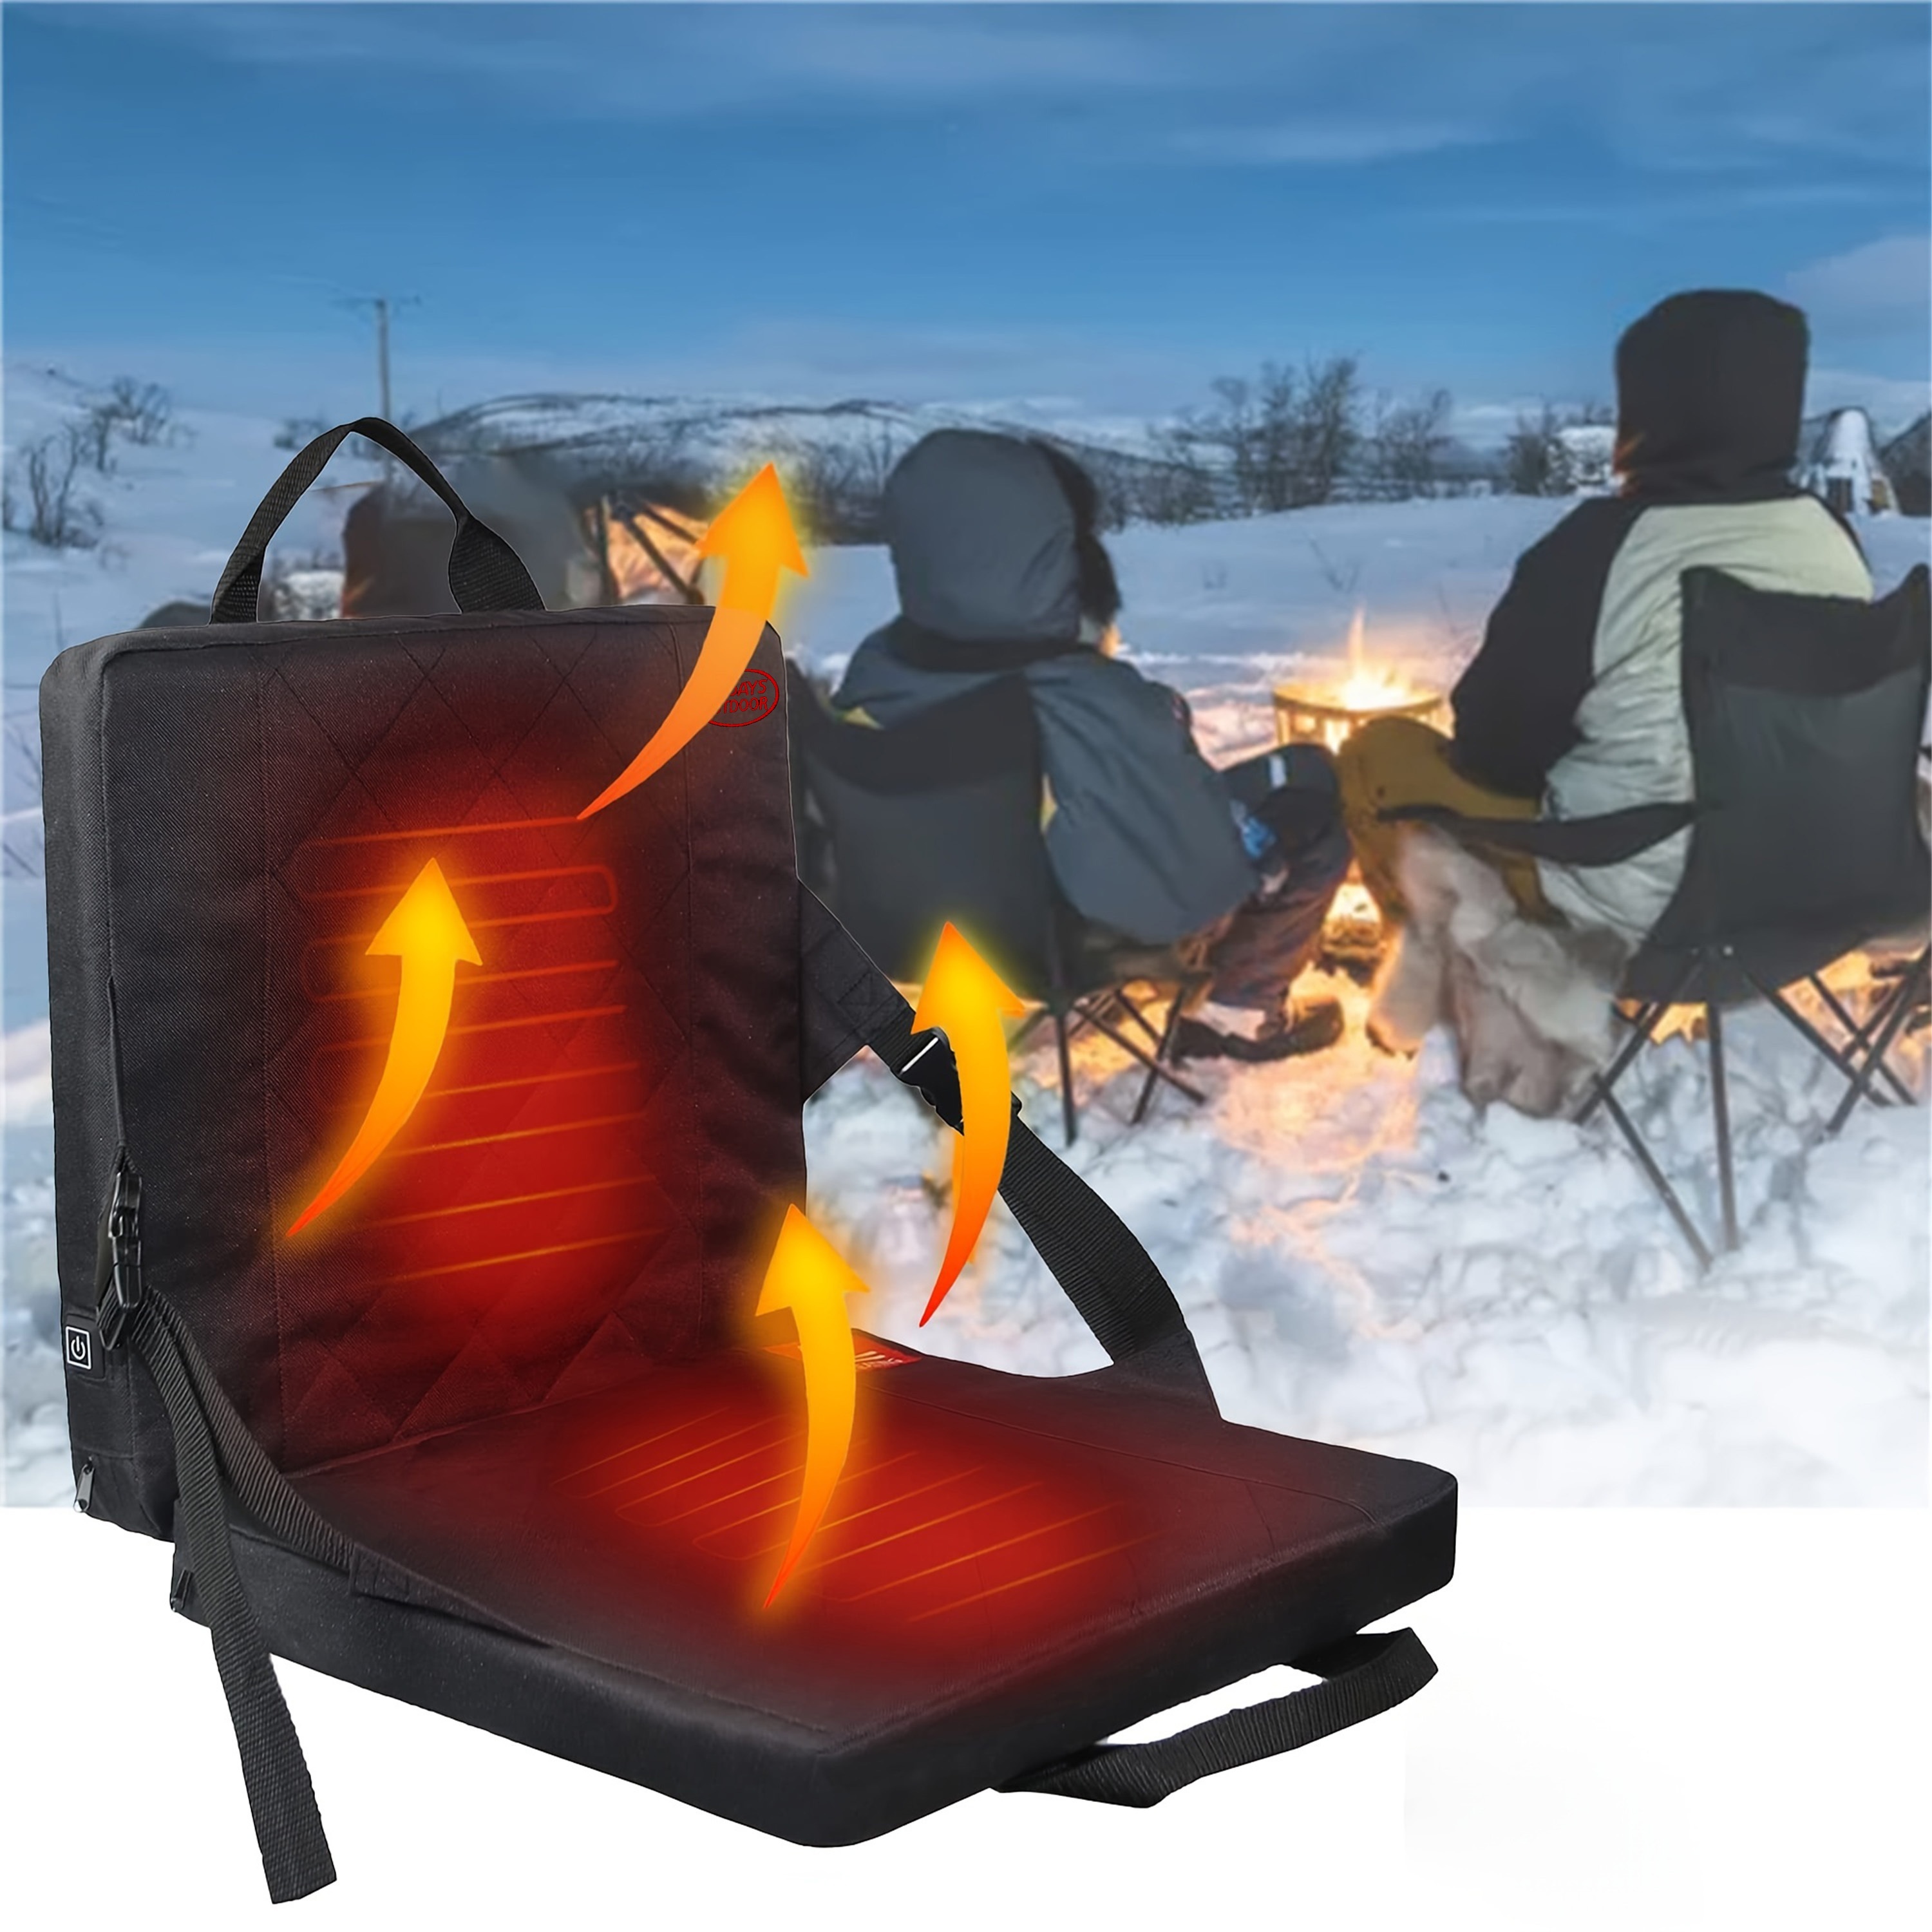 https://img.kwcdn.com/product/adjustable-portable-heated-seat-cushion/d69d2f15w98k18-a40a098a/Fancyalgo/VirtualModelMatting/55197308b6a8fa88e97247edcc294c1f.jpg